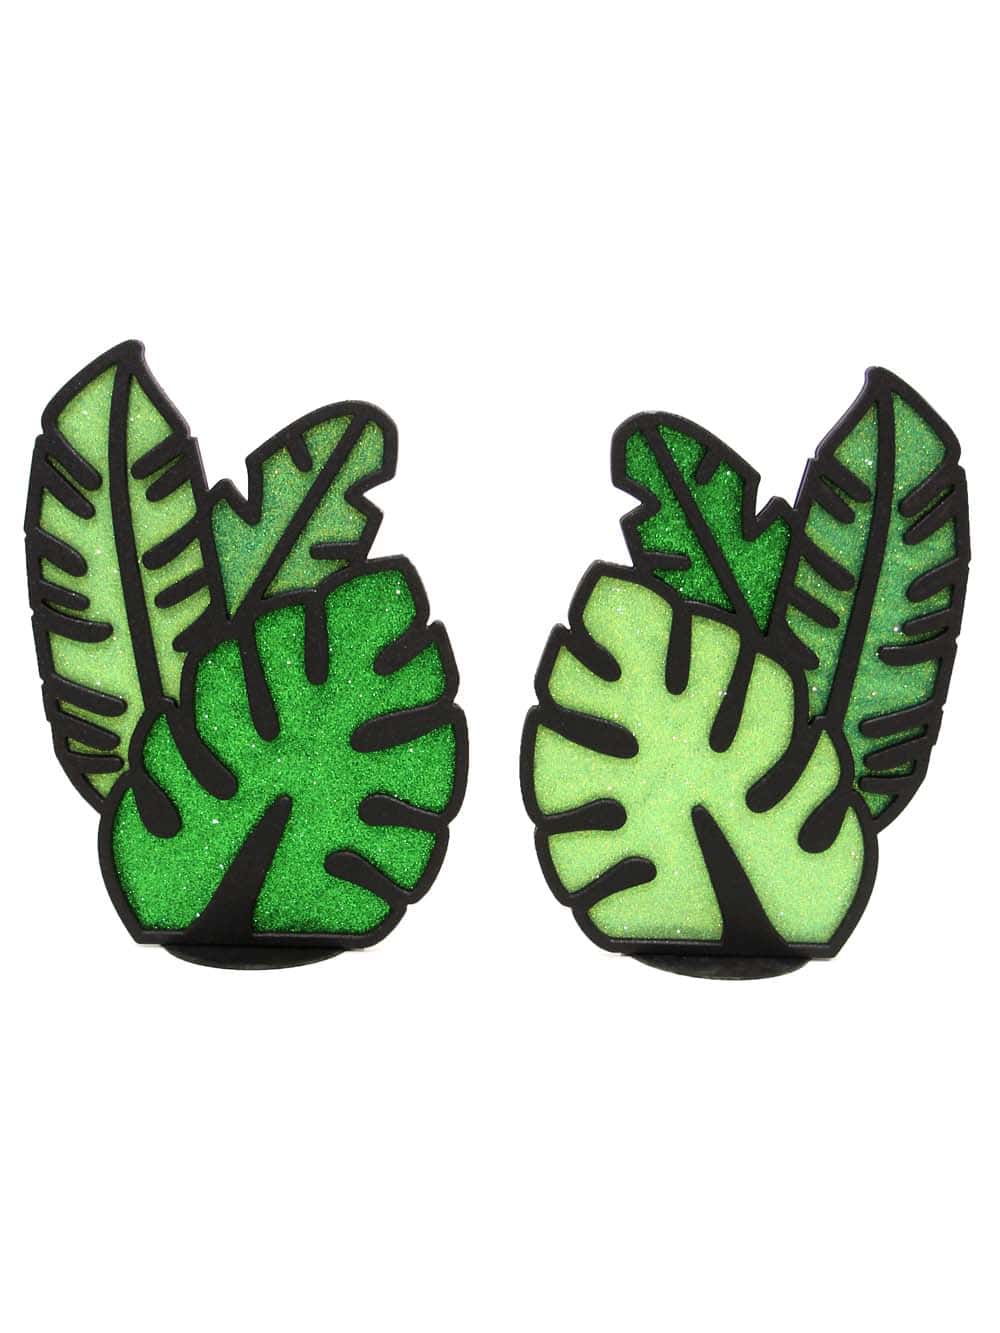 Jungle Leaf Set - Small (Green)